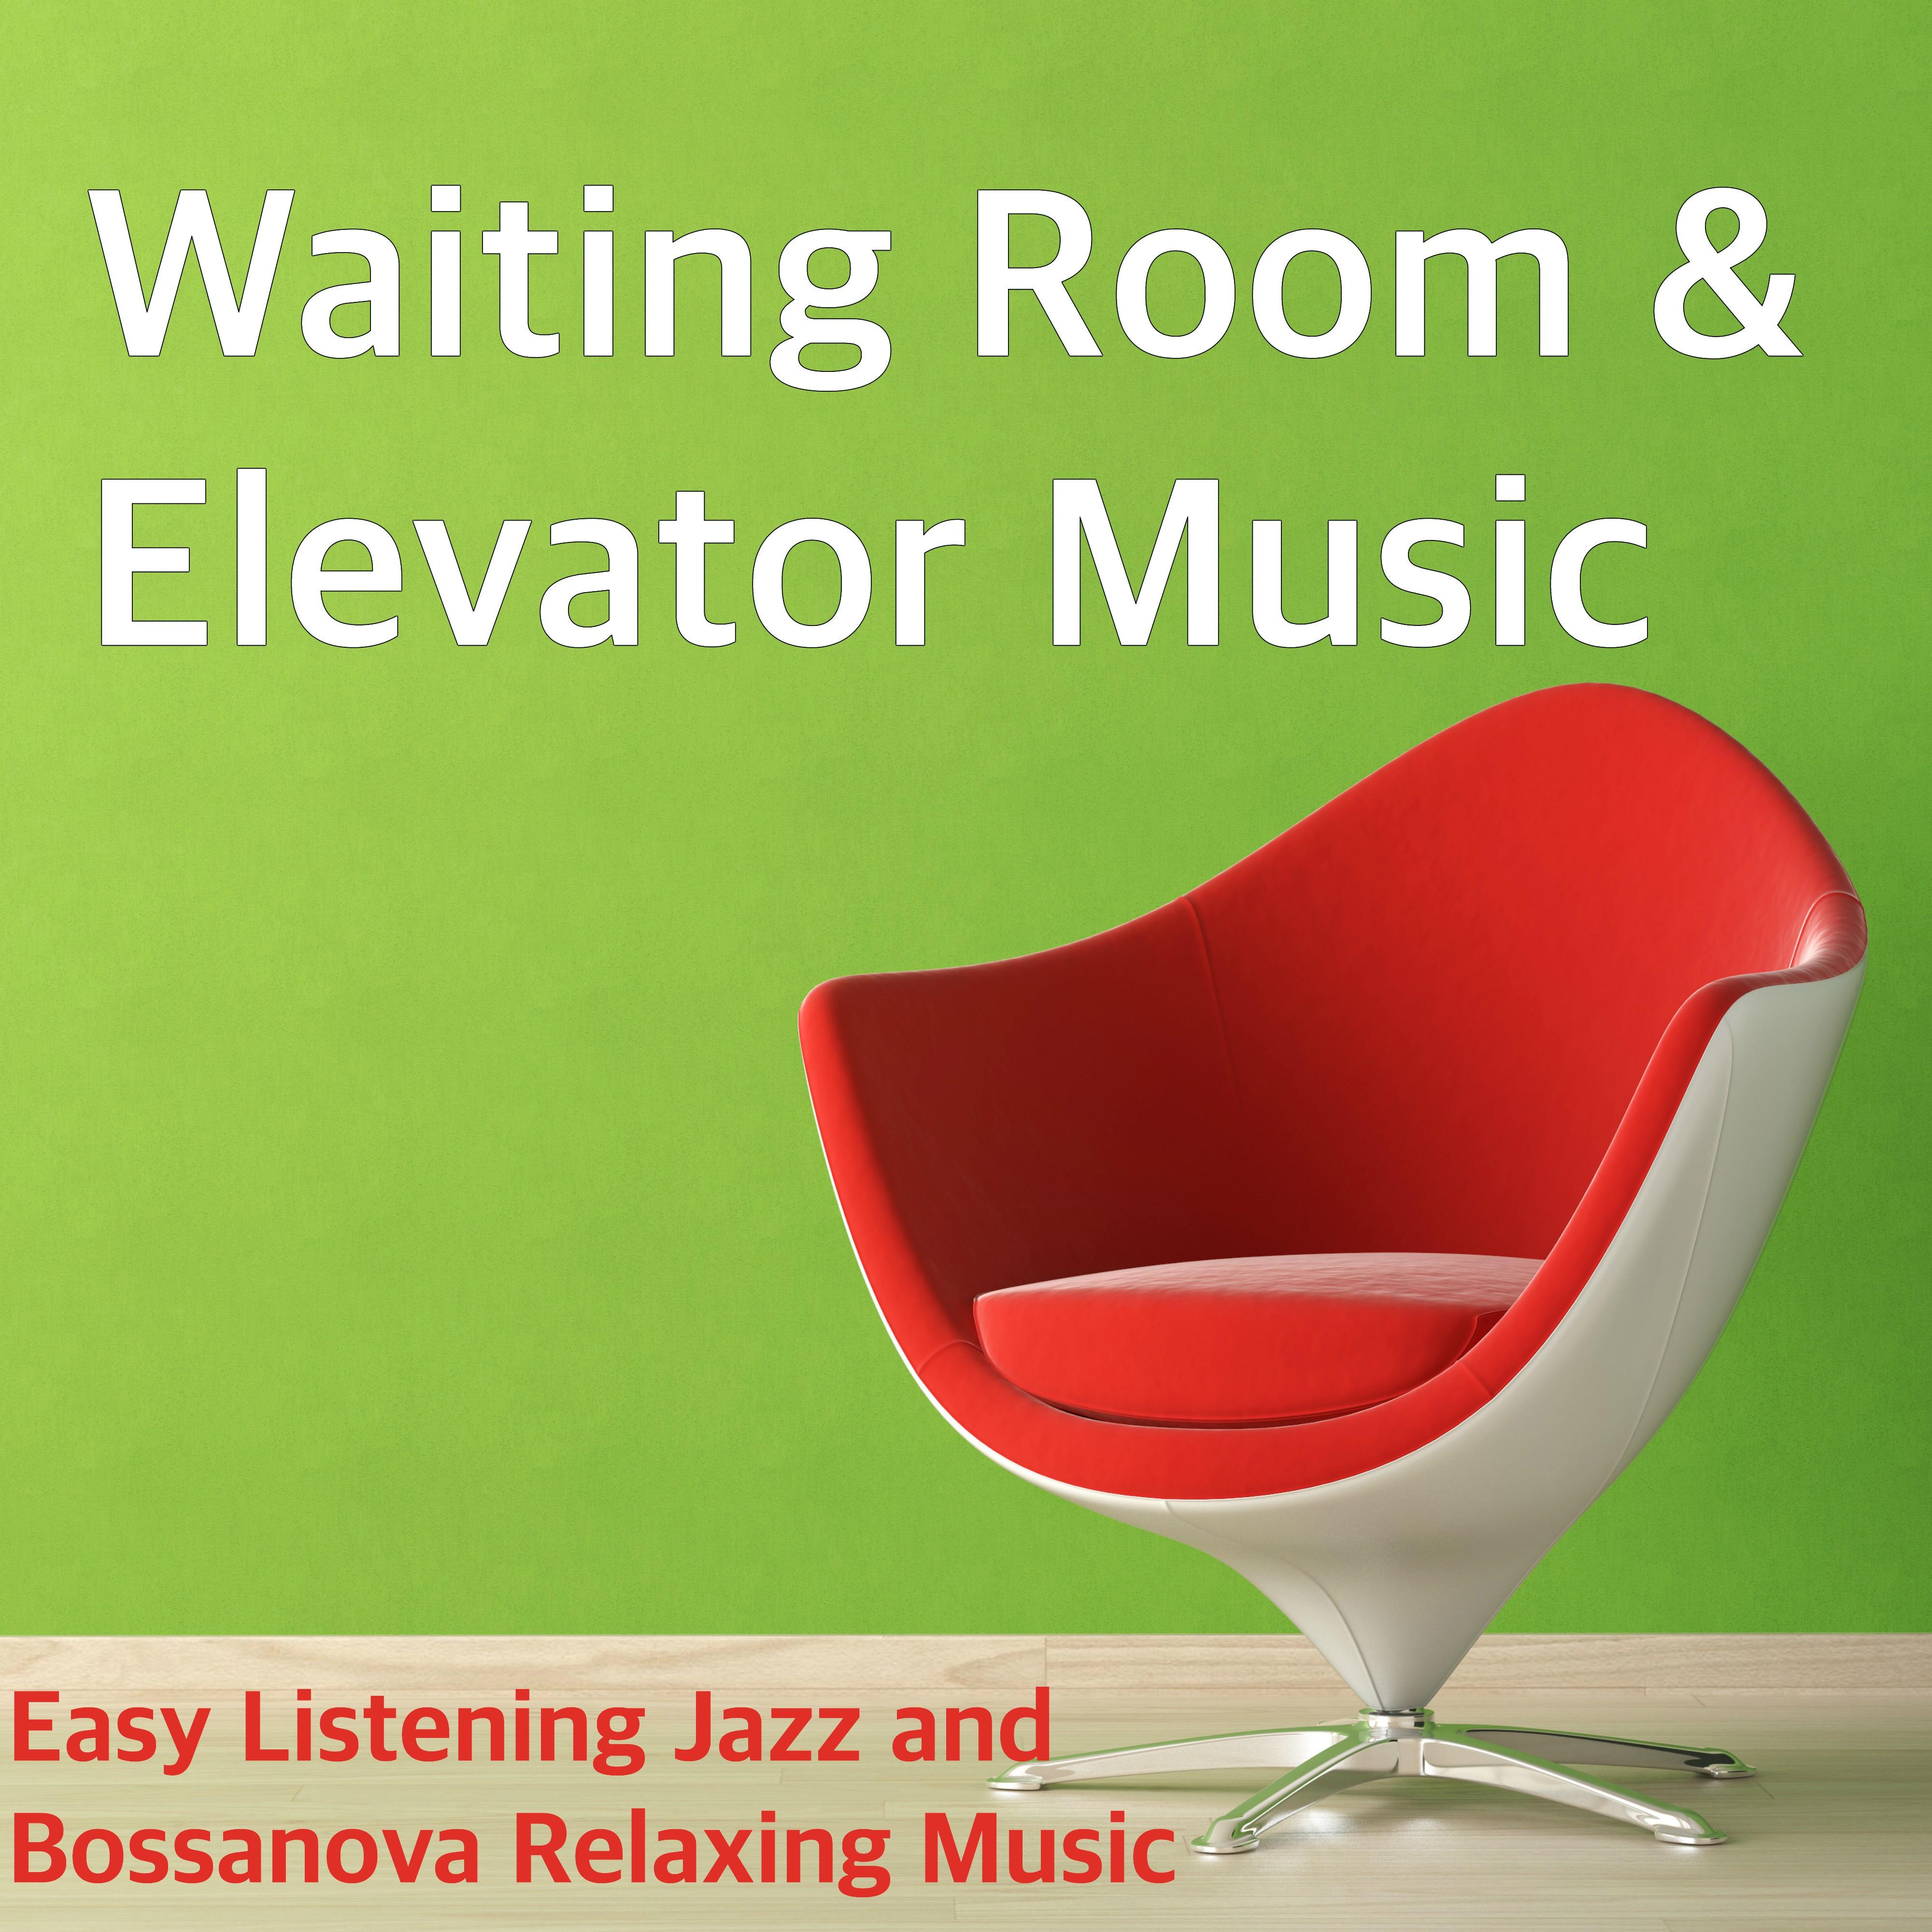 Waiting Room & Elevator Music - Easy Listening Jazz and Bossanova Relaxing Music